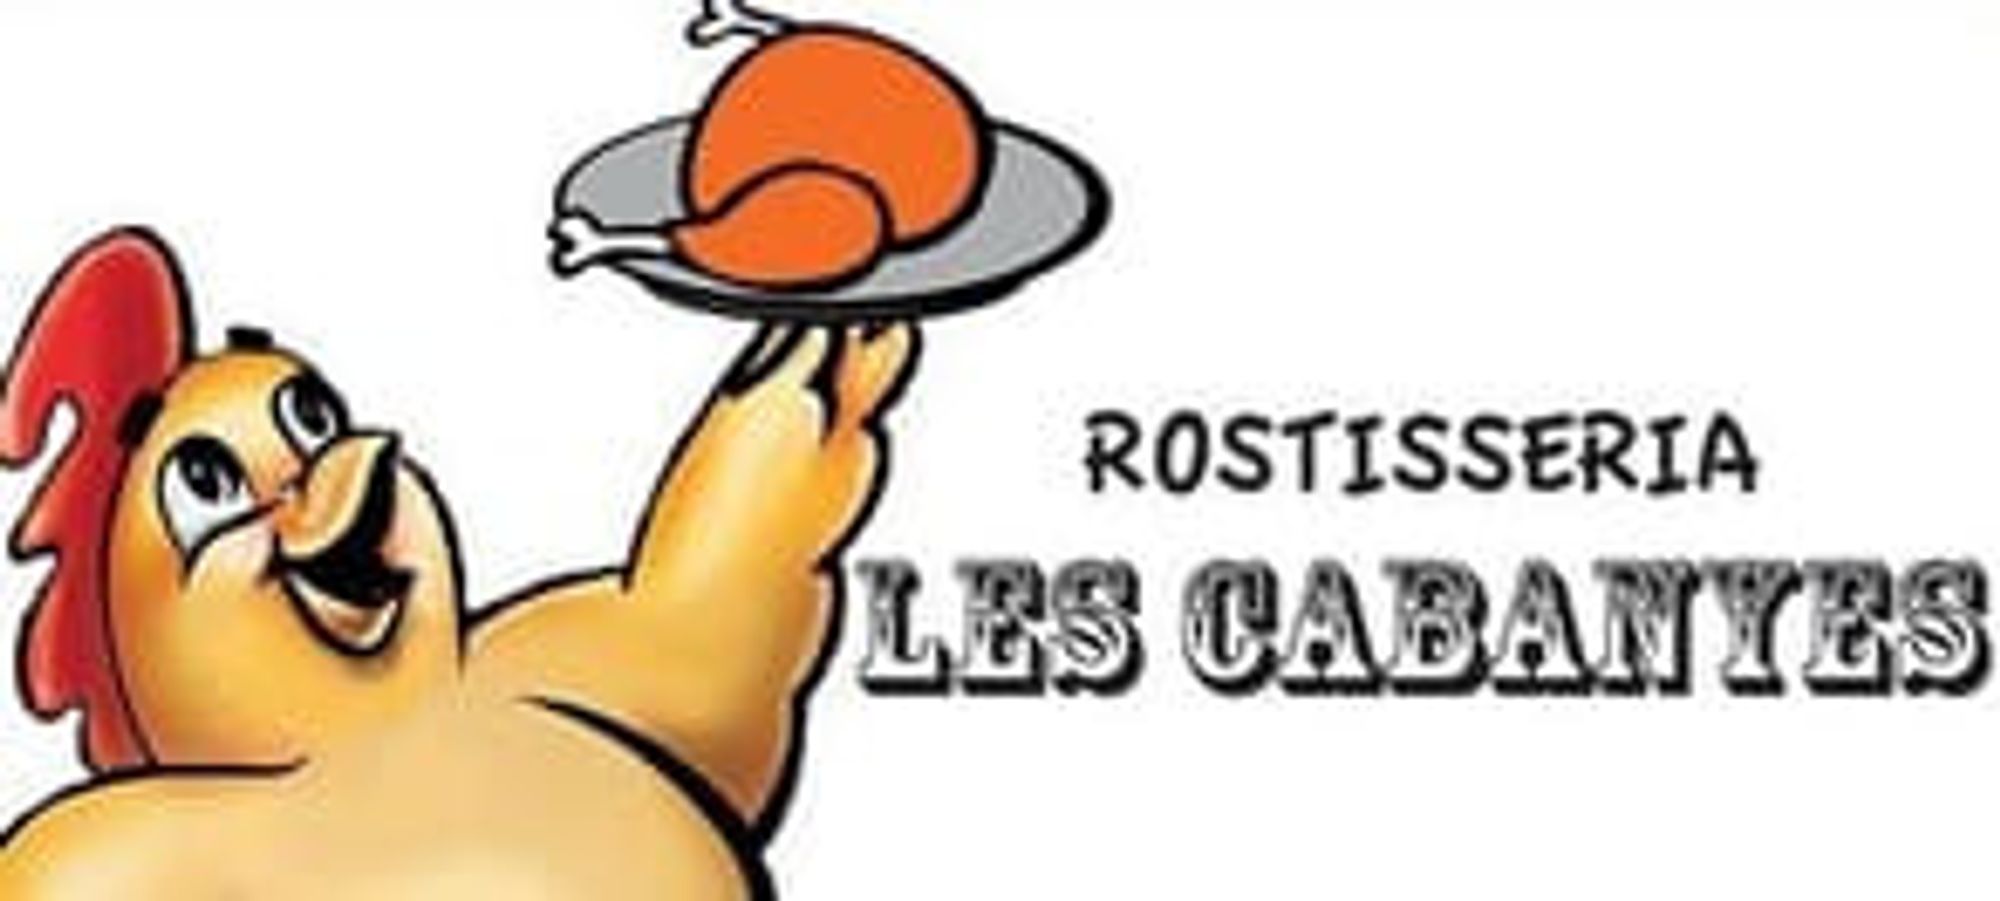 Rostisseria Les Cabanyes